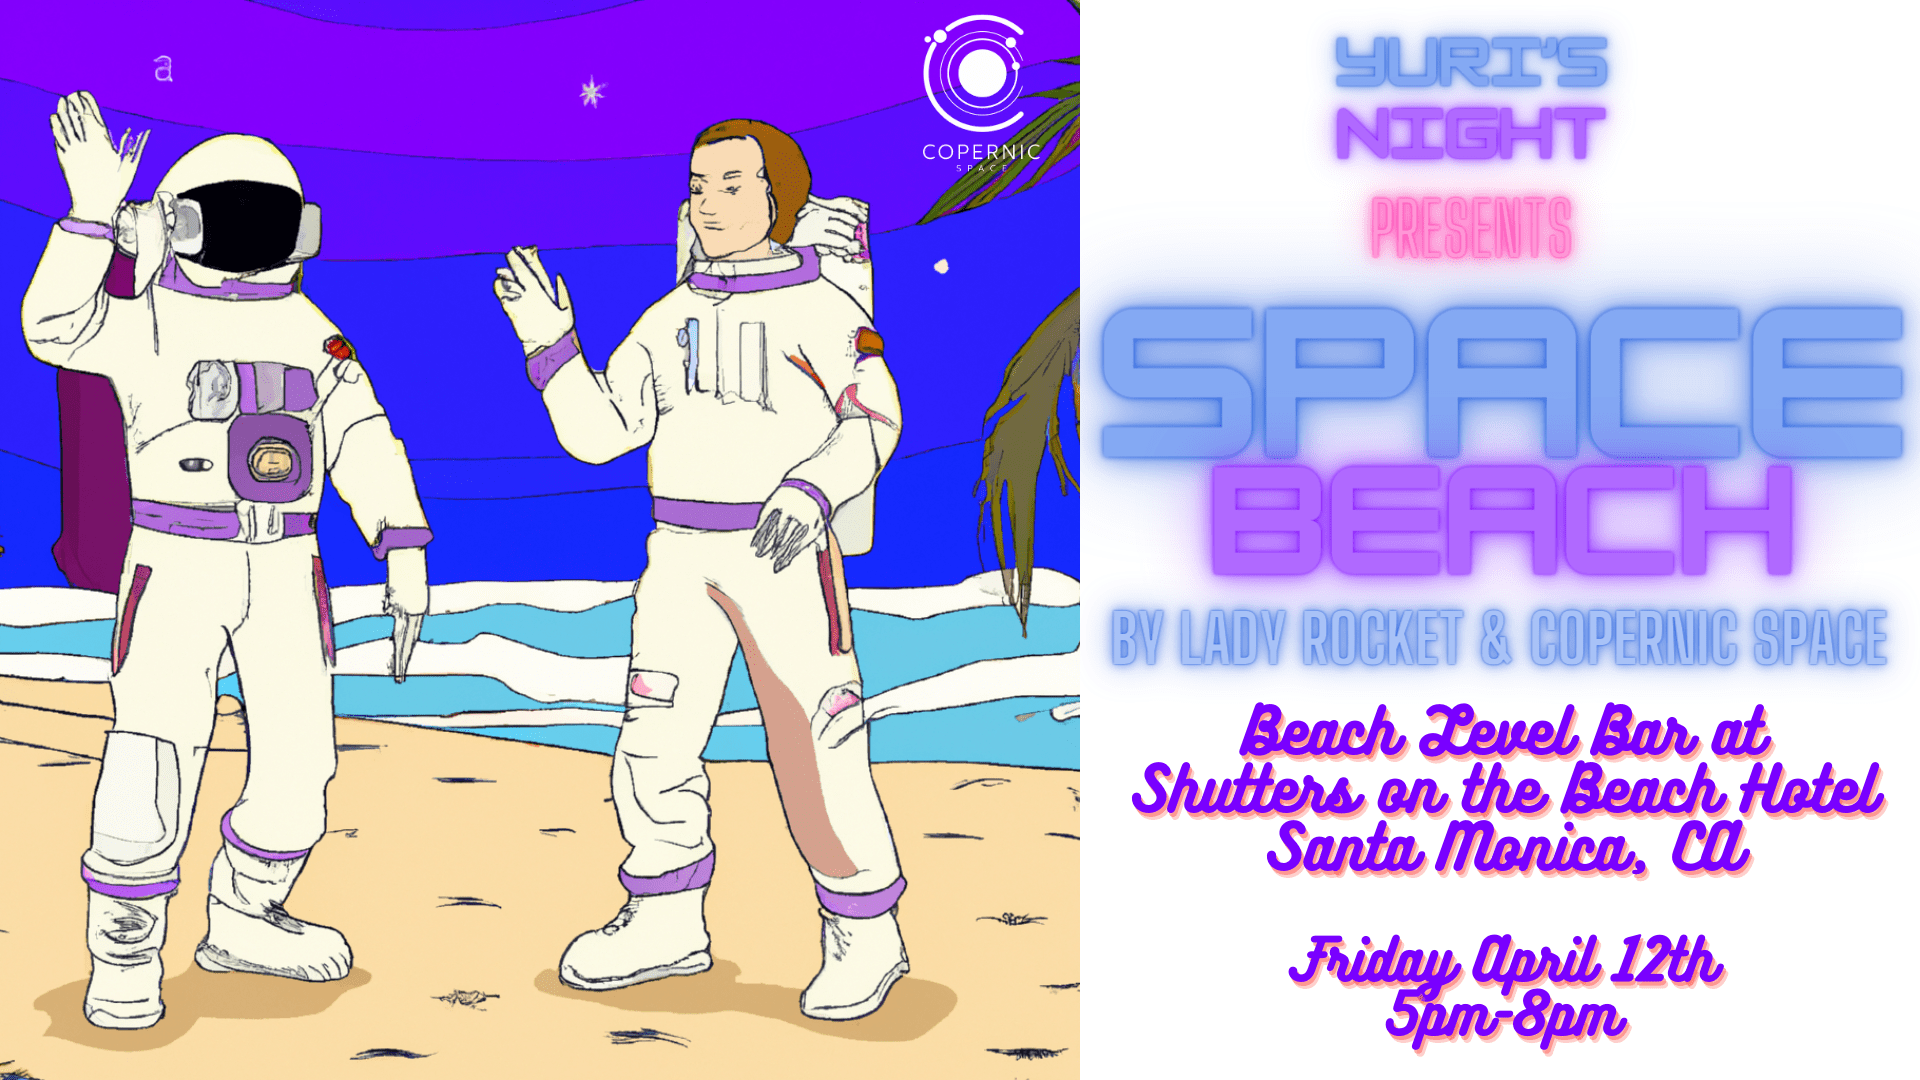 Yuri’s Night – Space Beach by Lady Rocket & Copernic Space